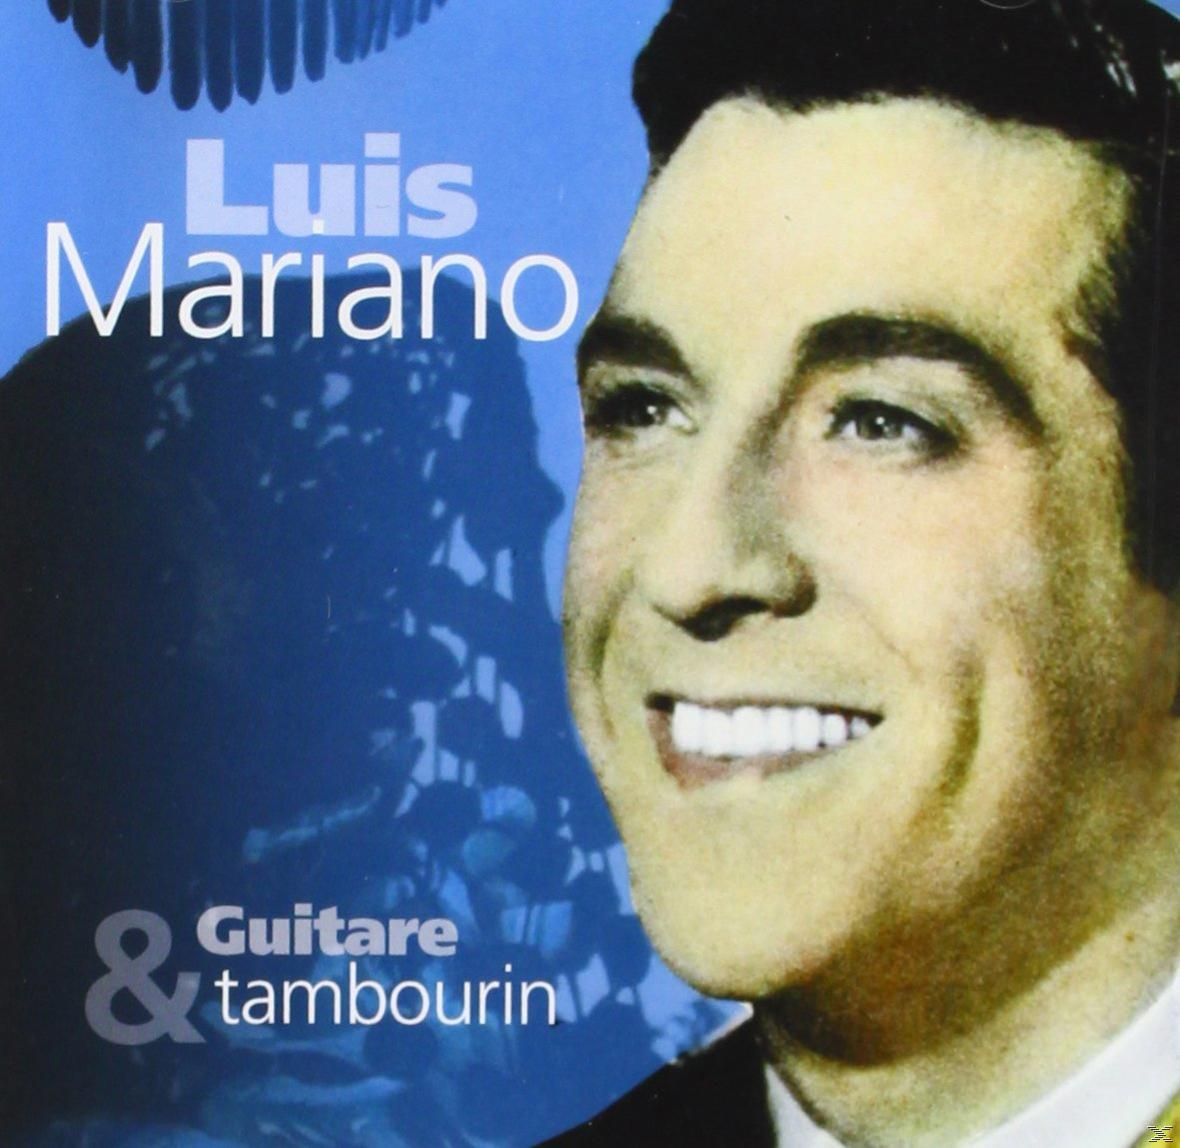 Luis Mariano - Guitare & Tambourin (CD) 